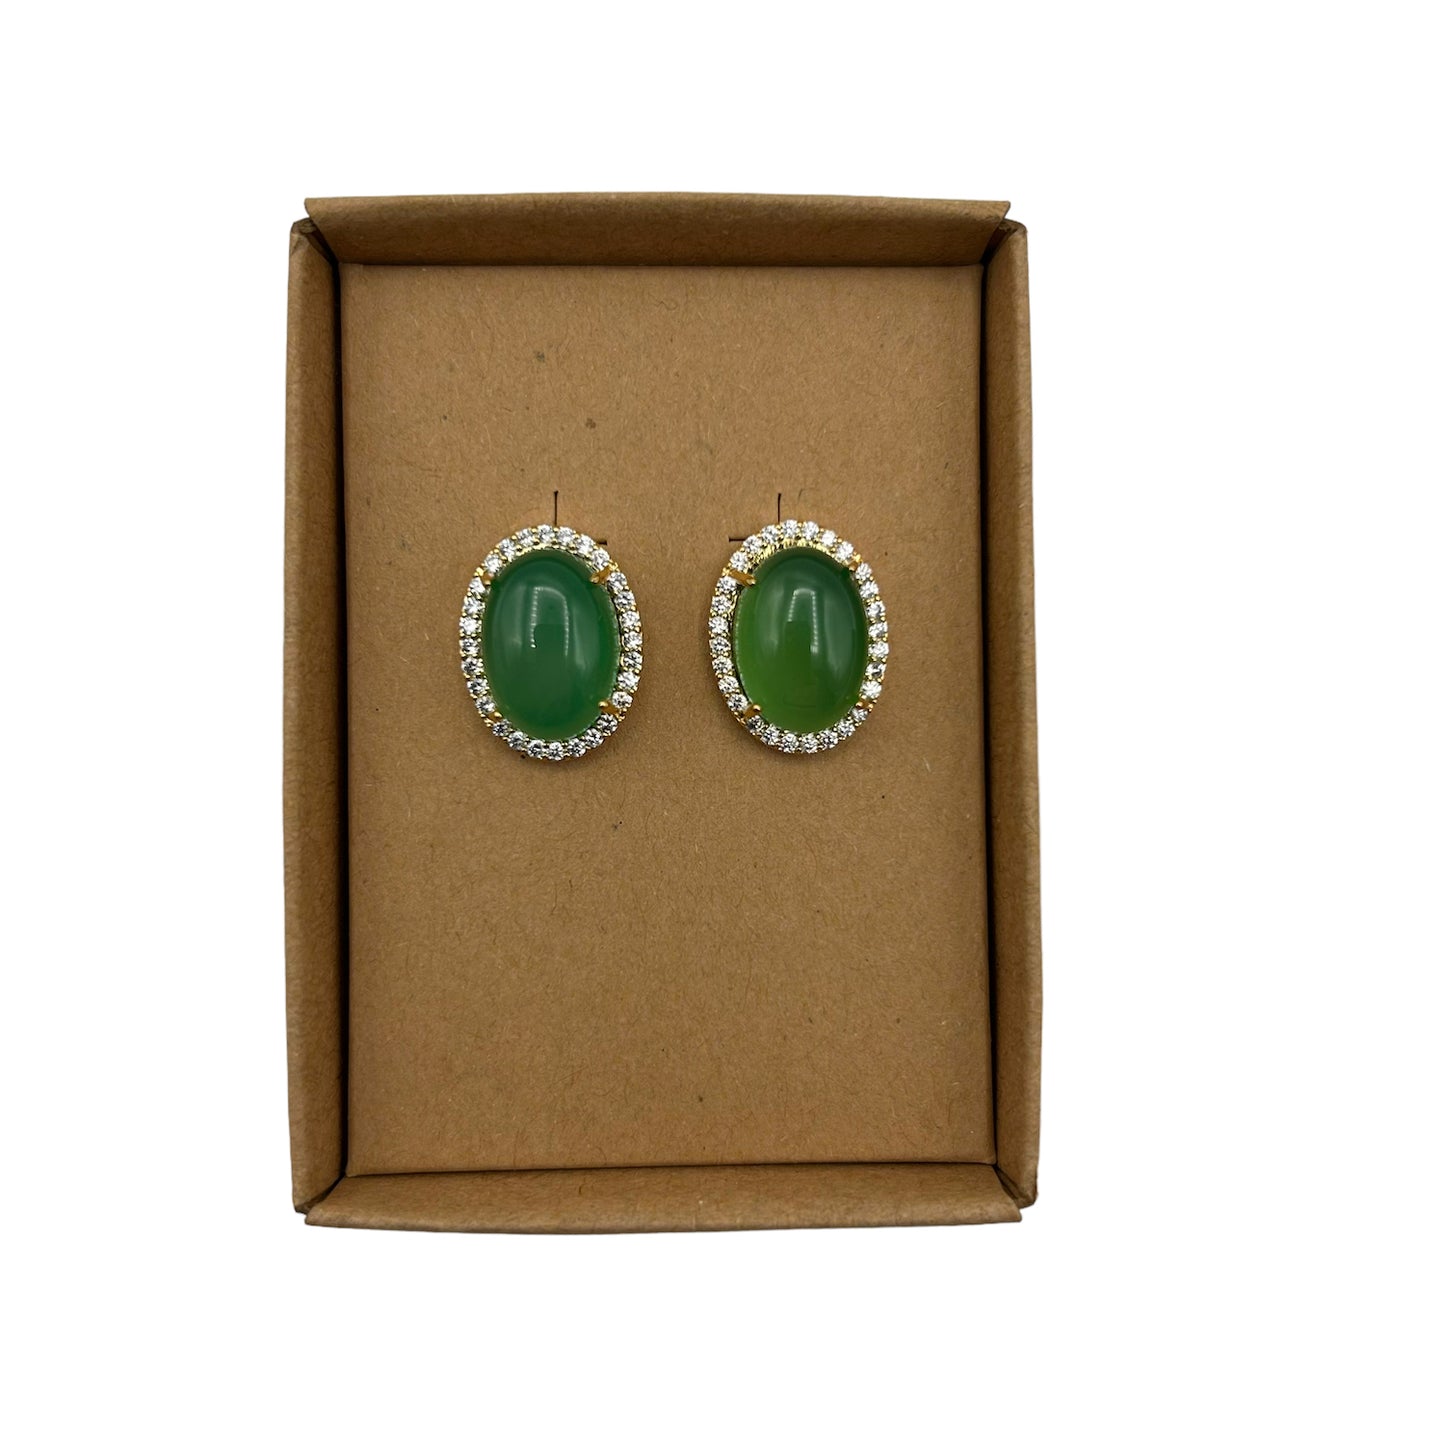 Retro jade style earrings